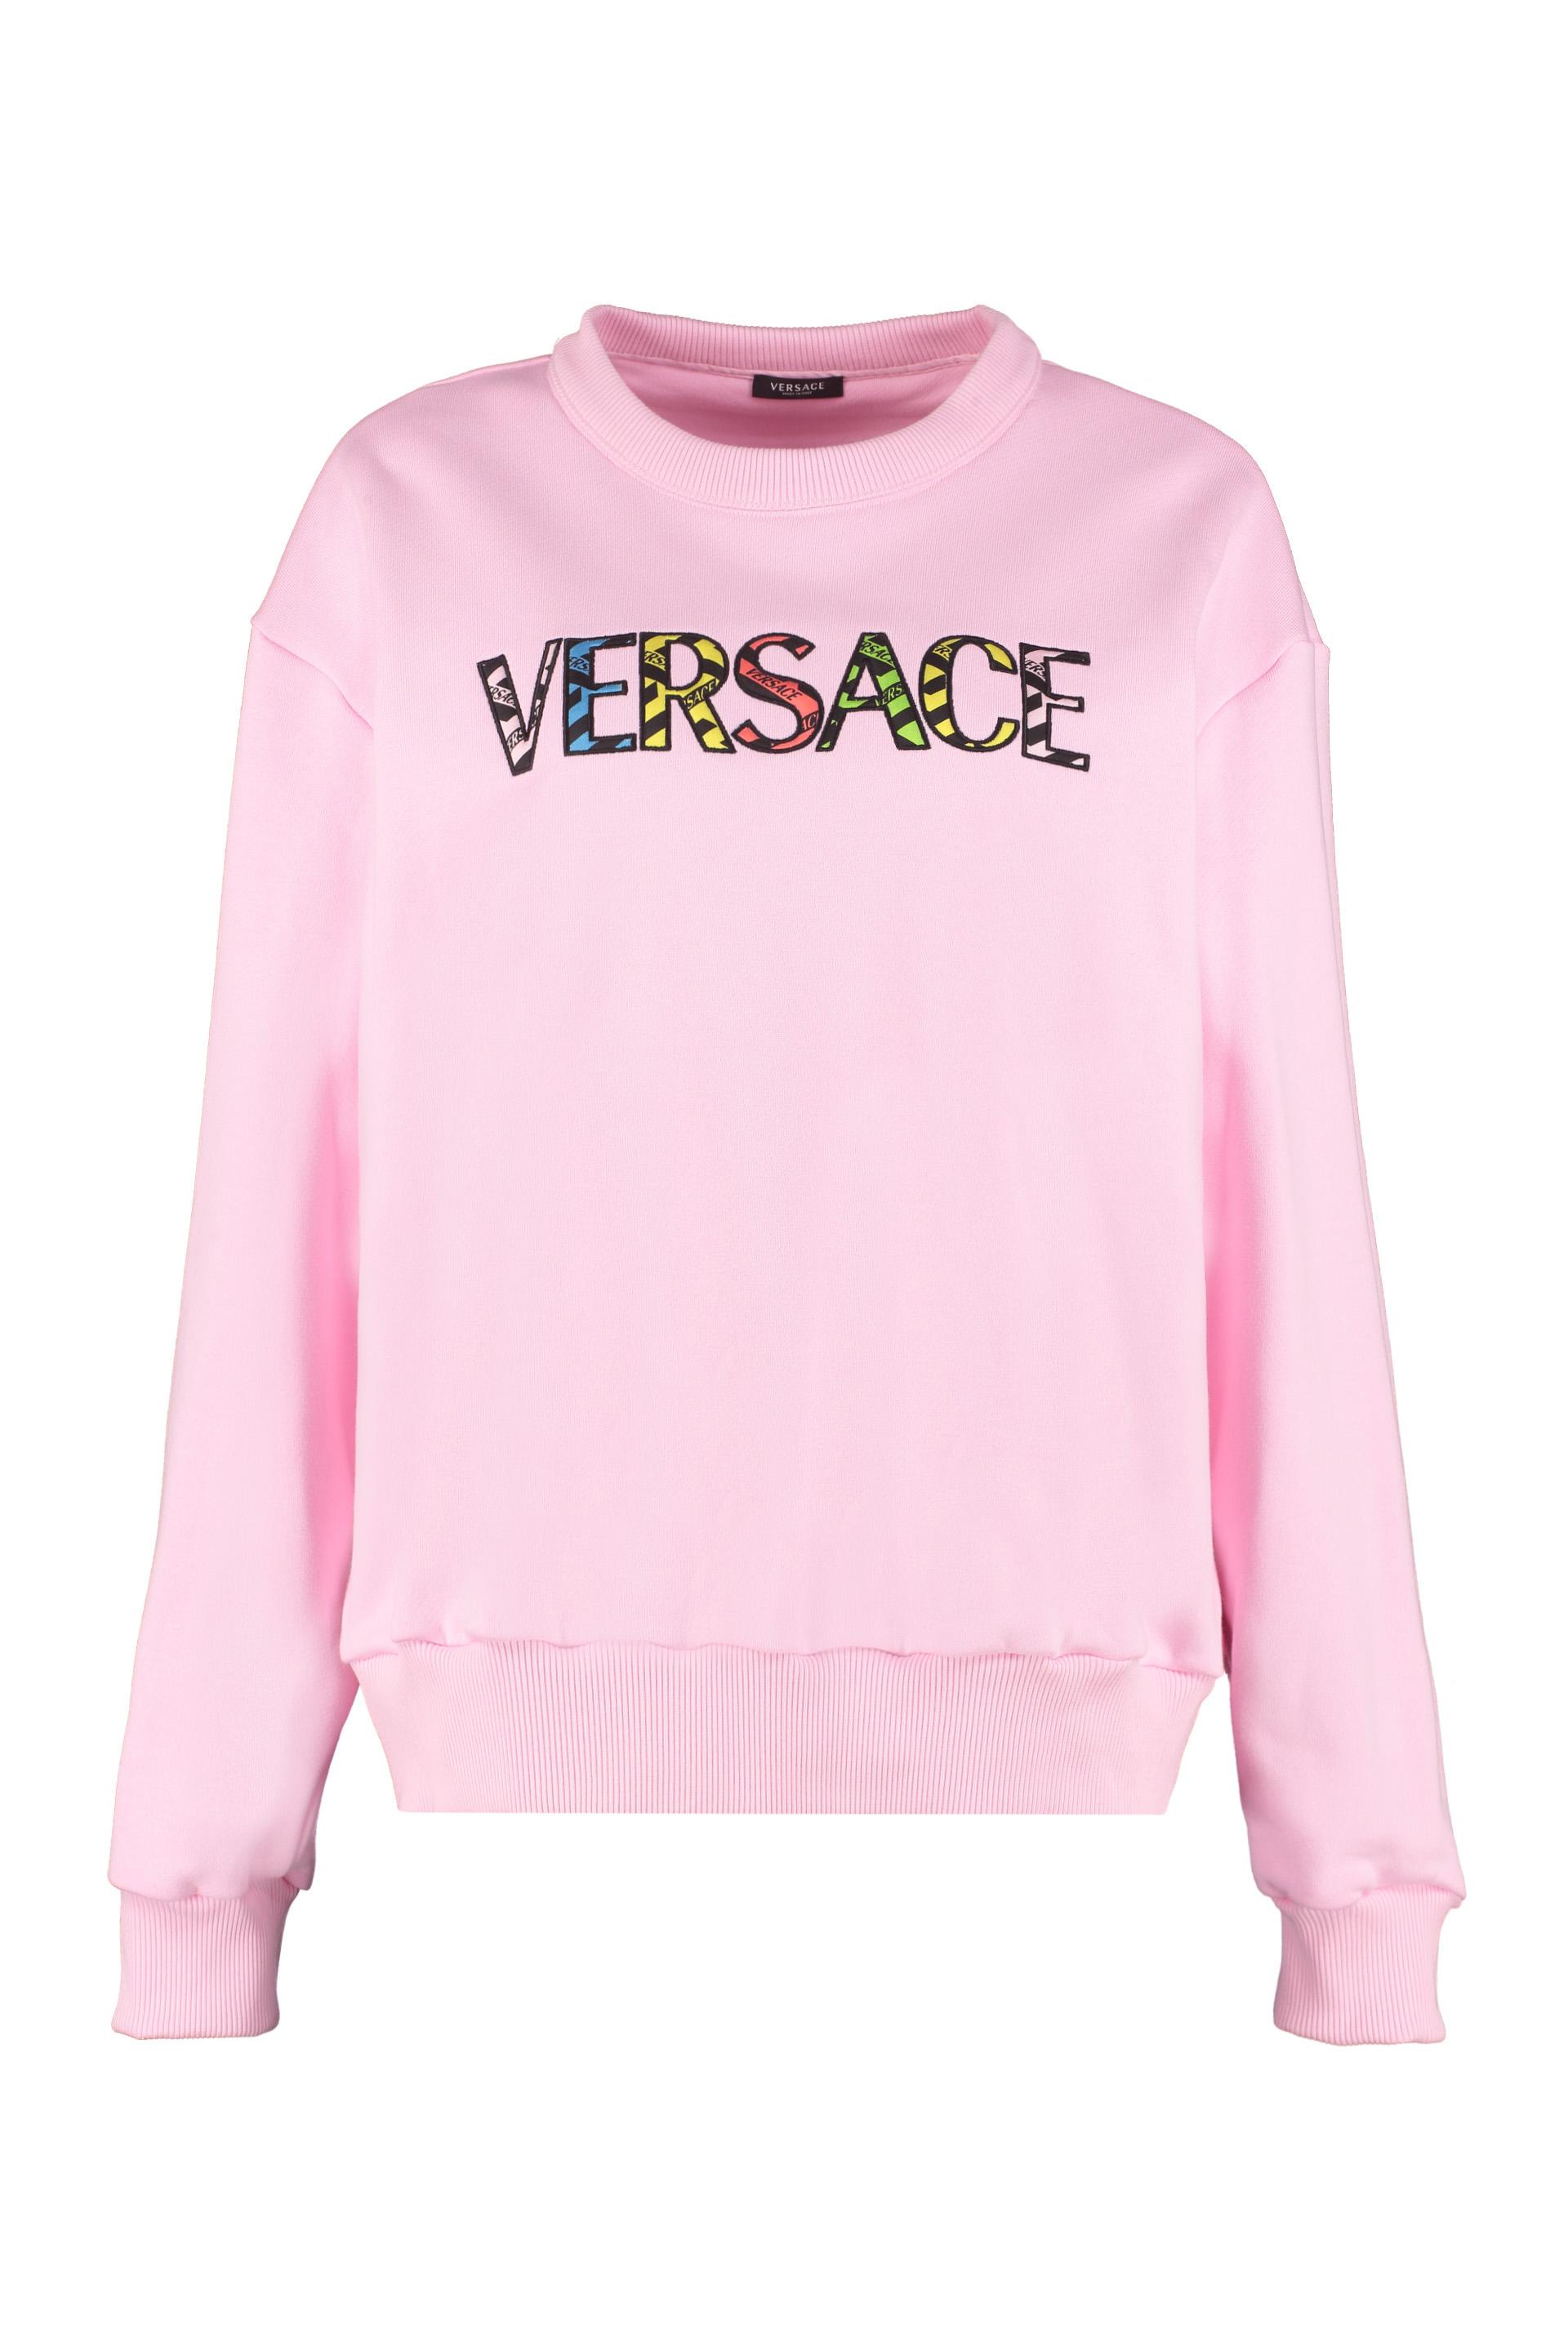 Versace Logo Detail Cotton Sweatshirt in Pink - Save 32% | Lyst UK